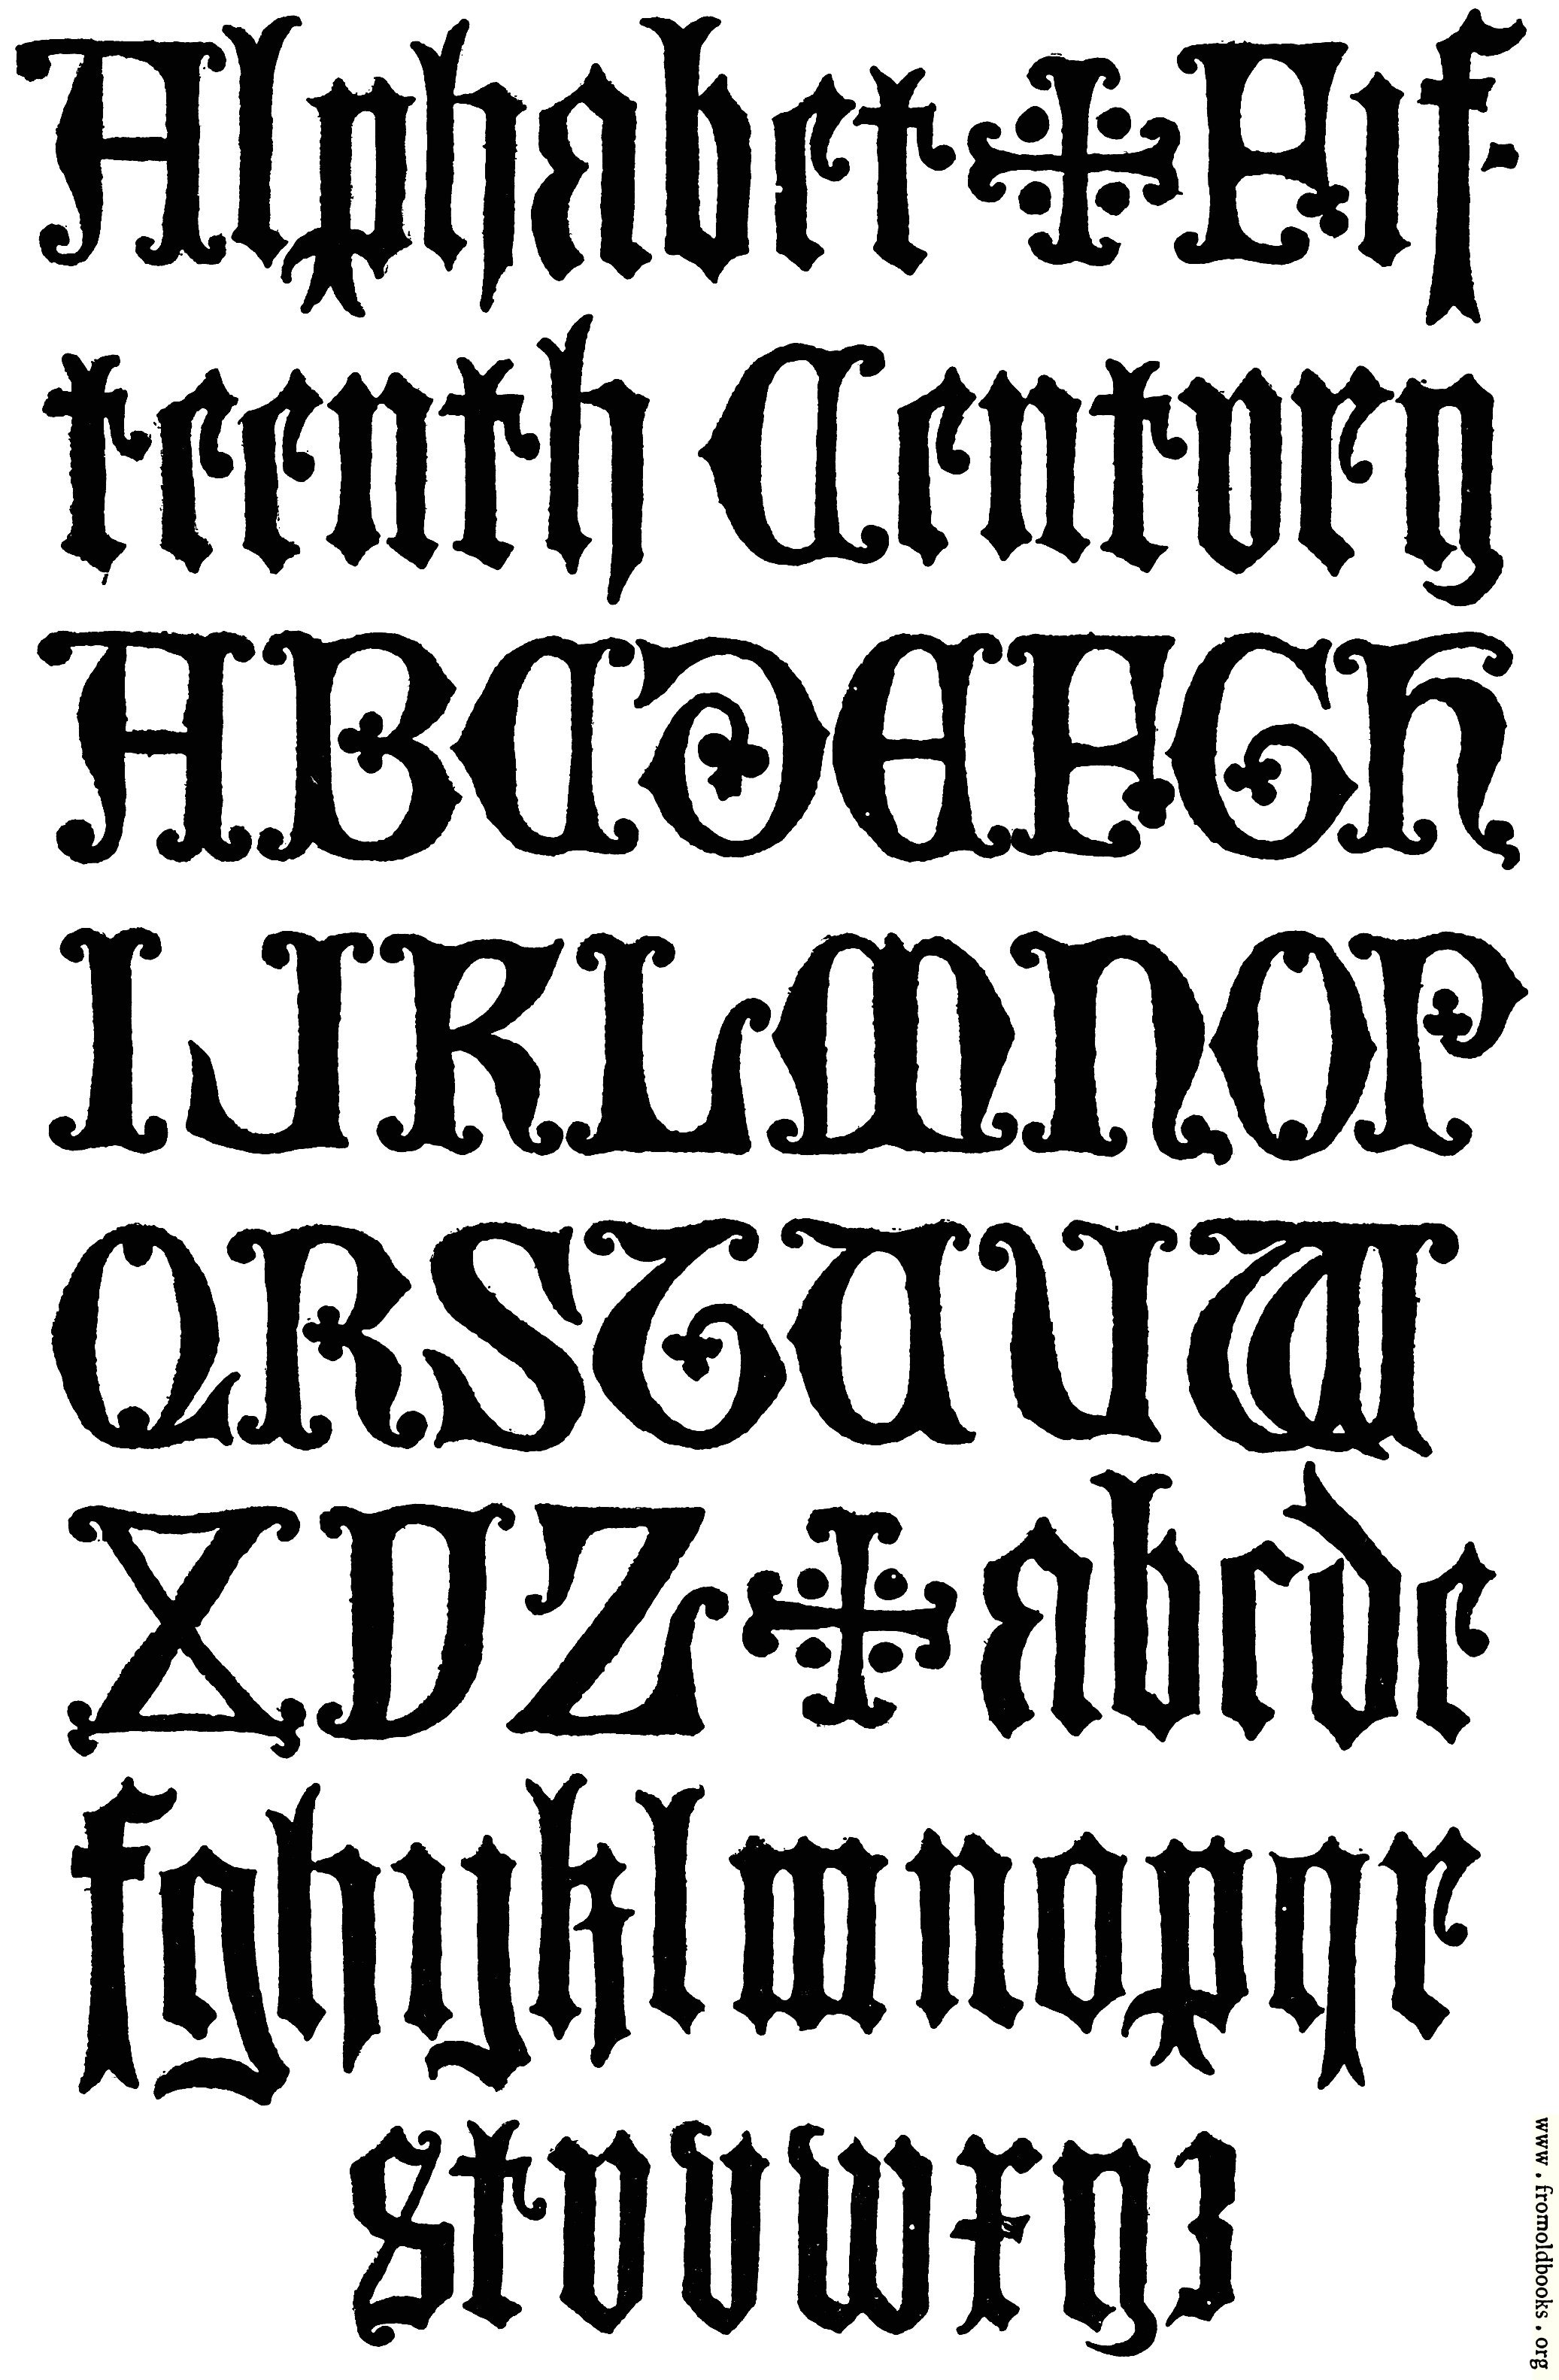 178. – English Gothic Letters. 15th Century. F.C.B.